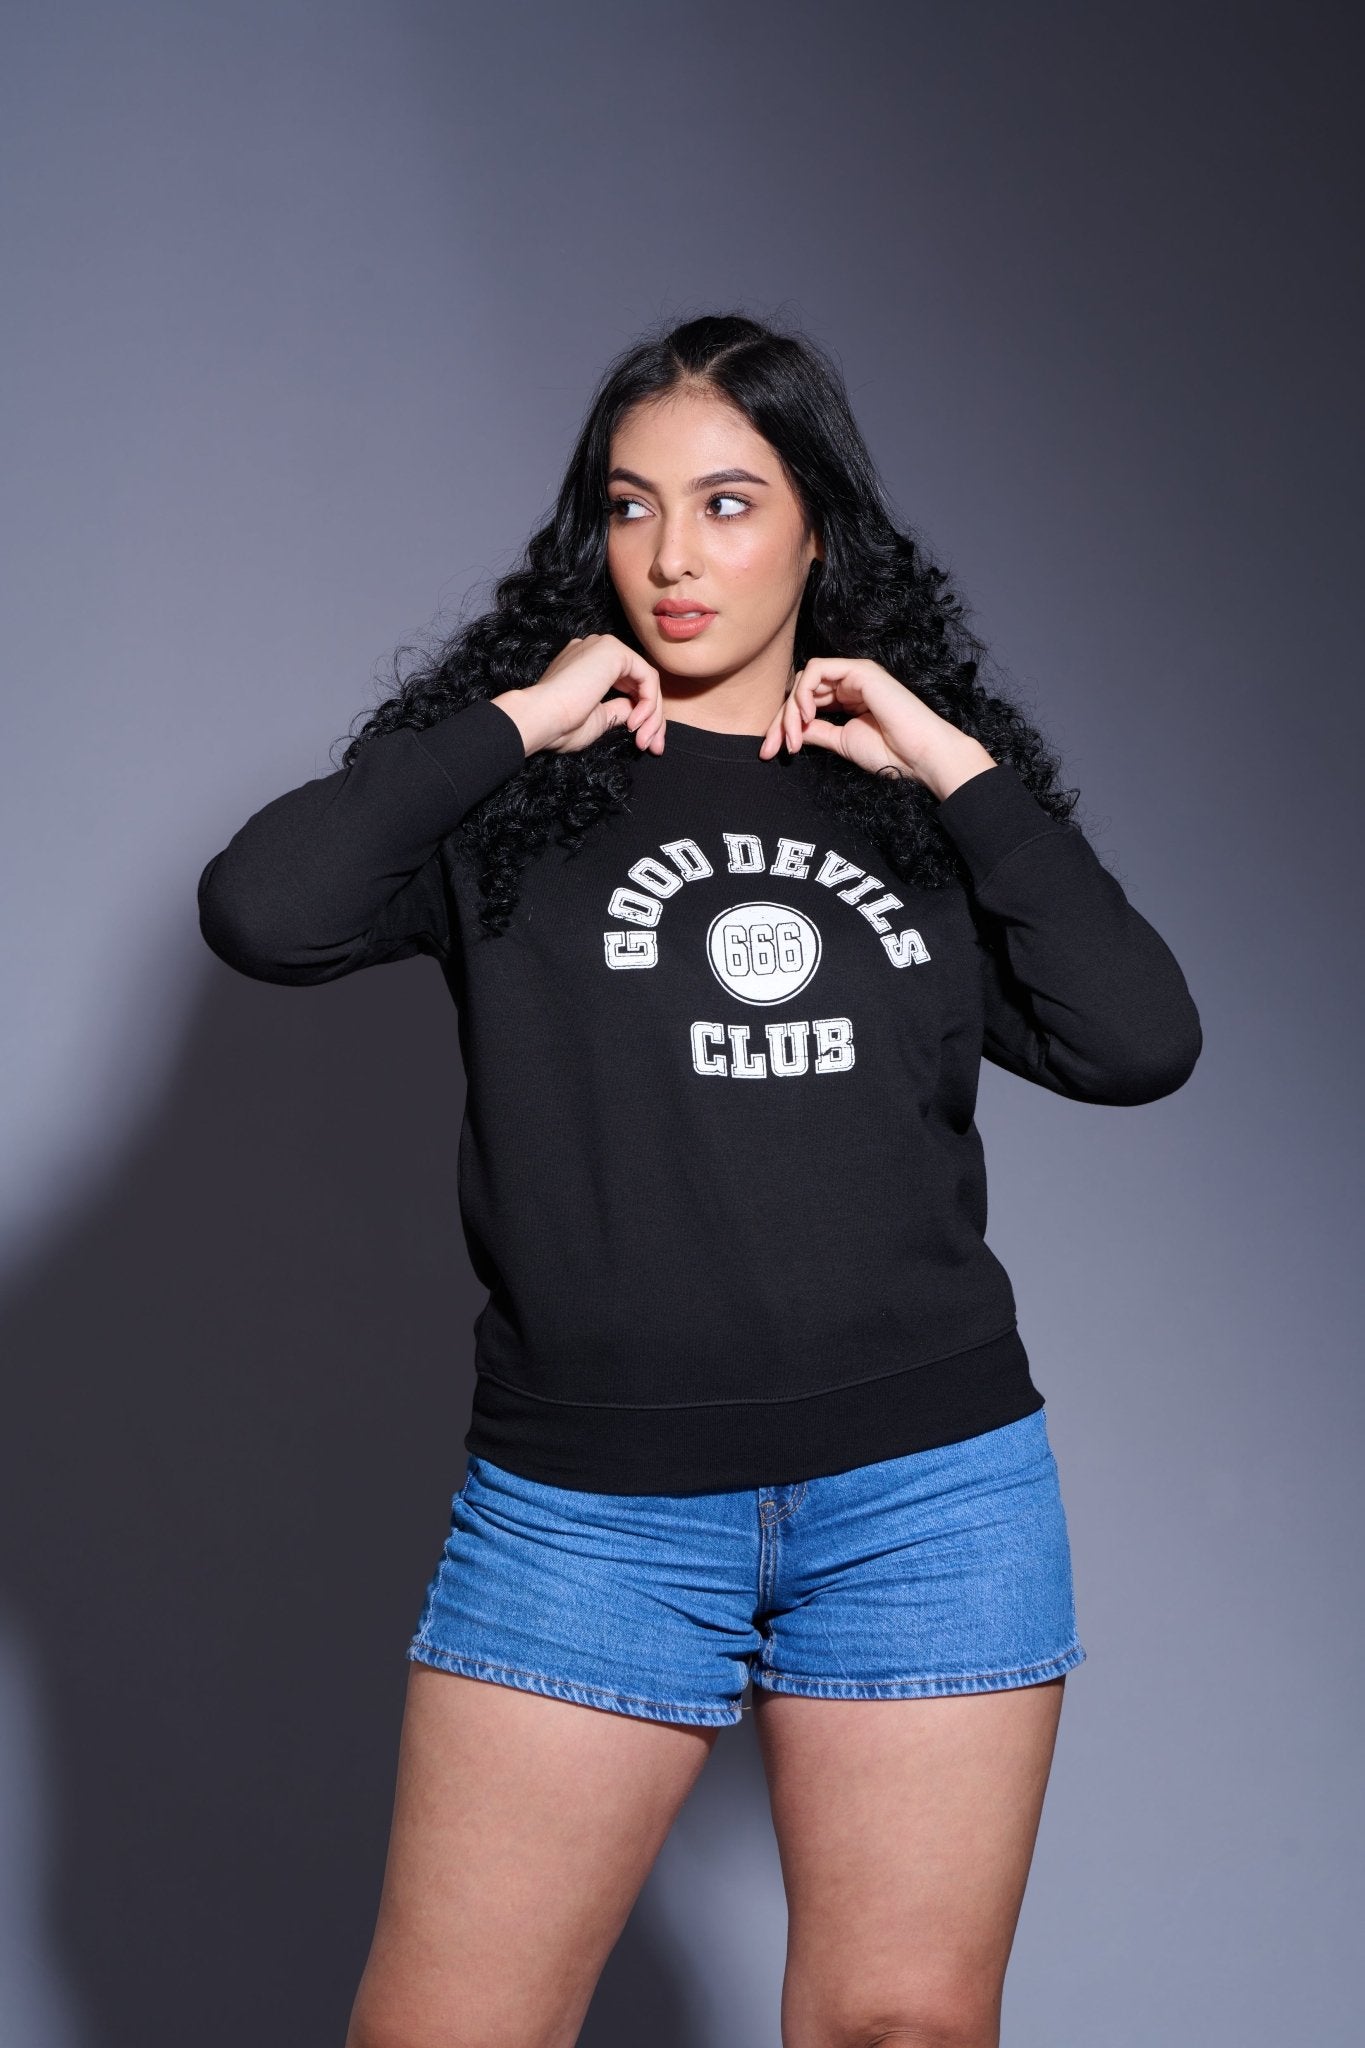 Go Devils Club Printed Black Sweatshirt for Women - Go Devil